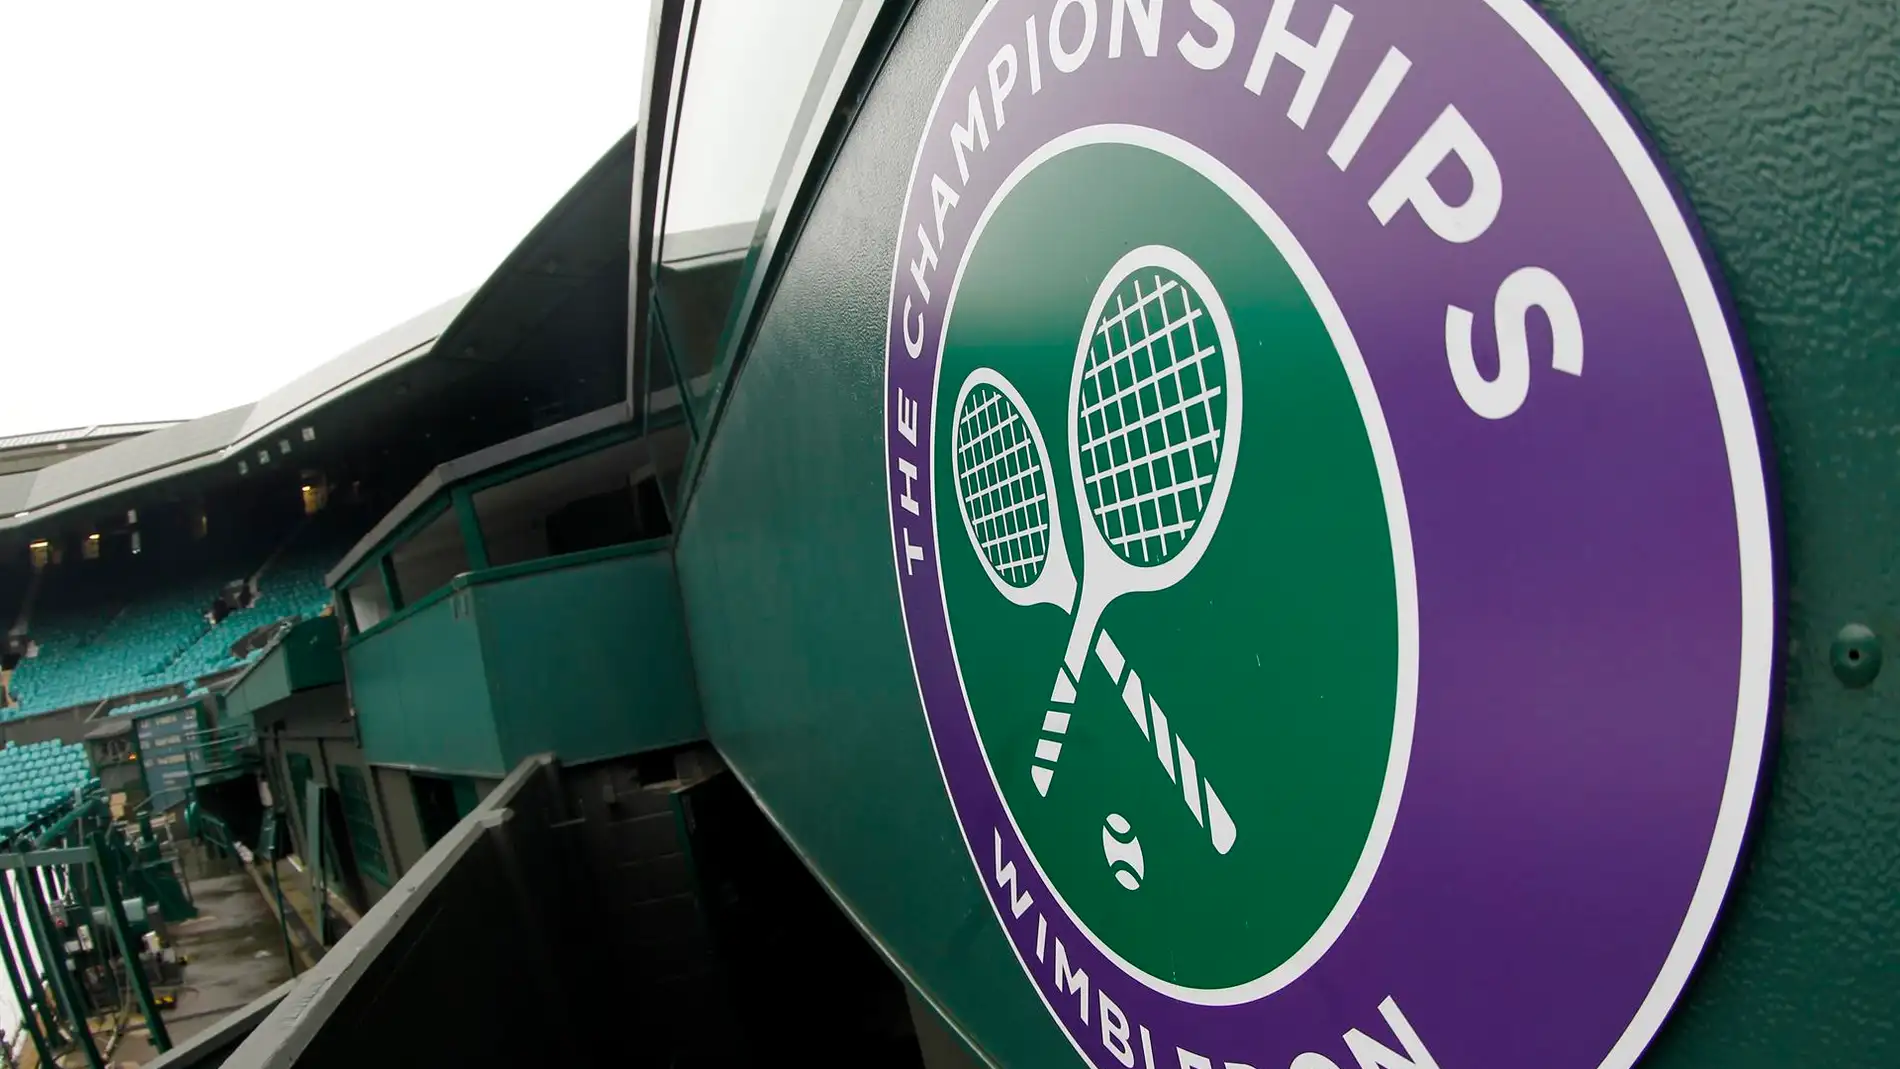 Logotipo del Campeonato de Wimbledon / Efe